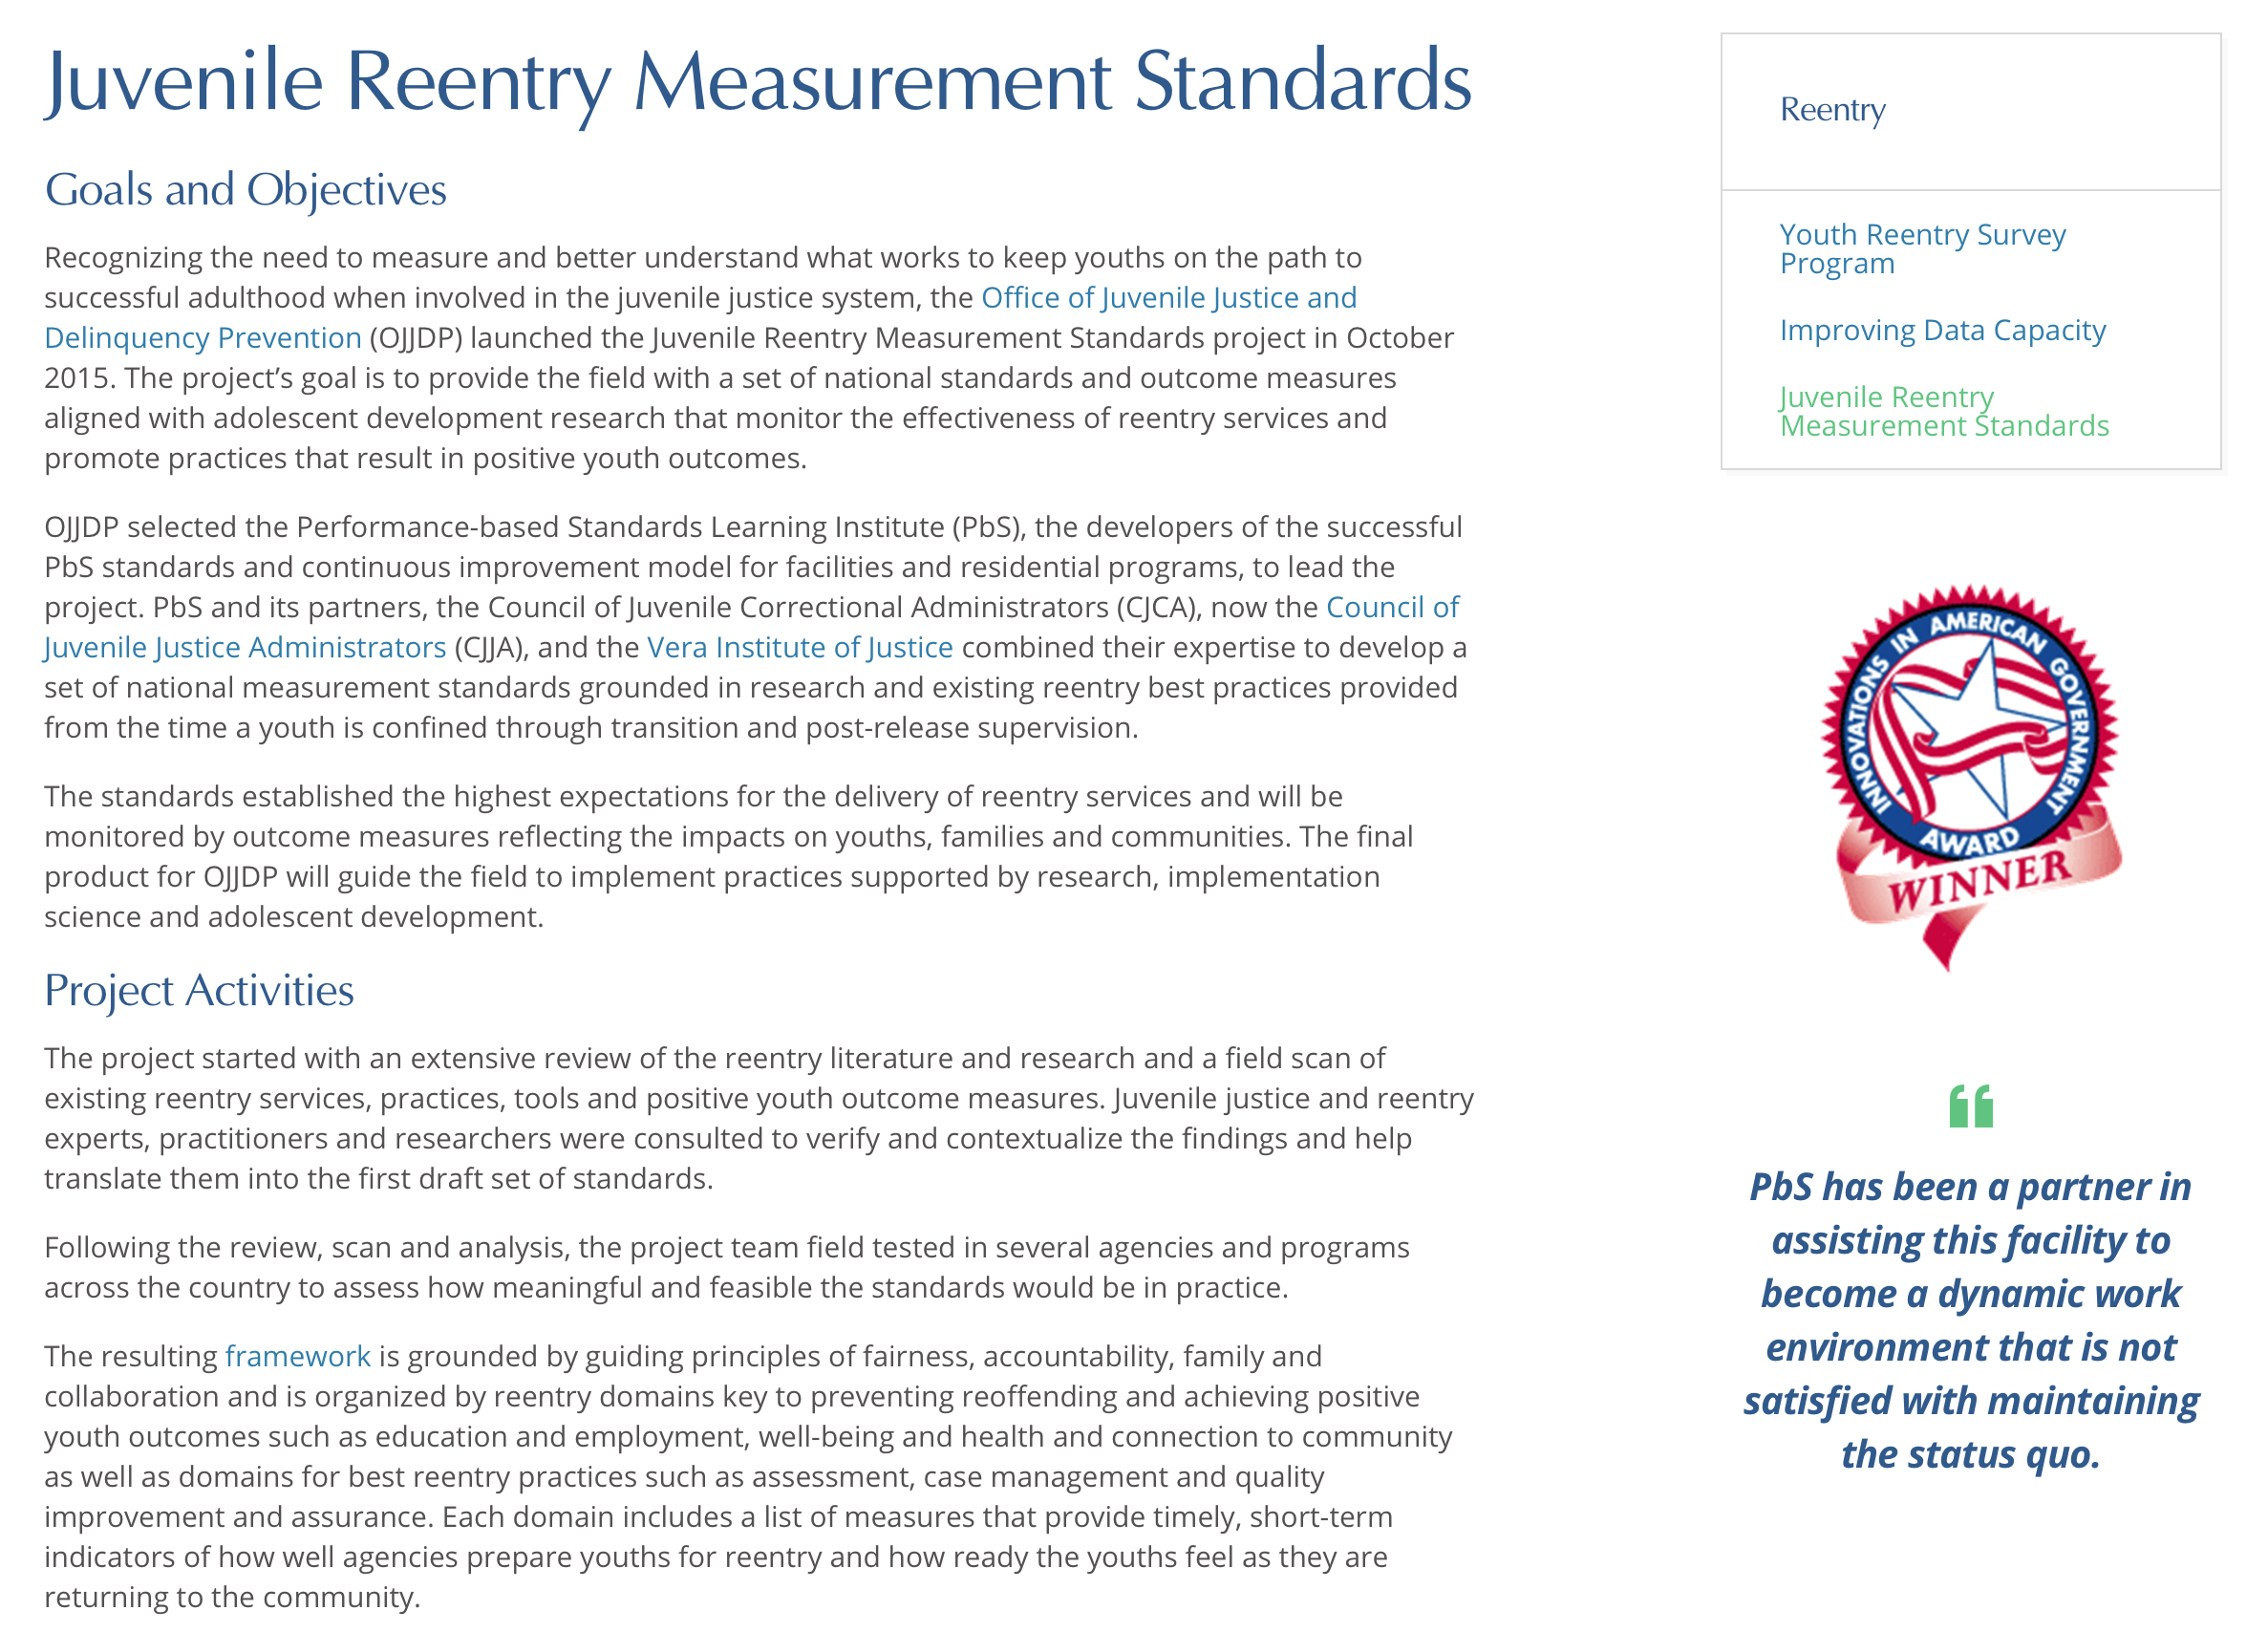 Juvenile Reentry Measurement Standards project overview screenshot